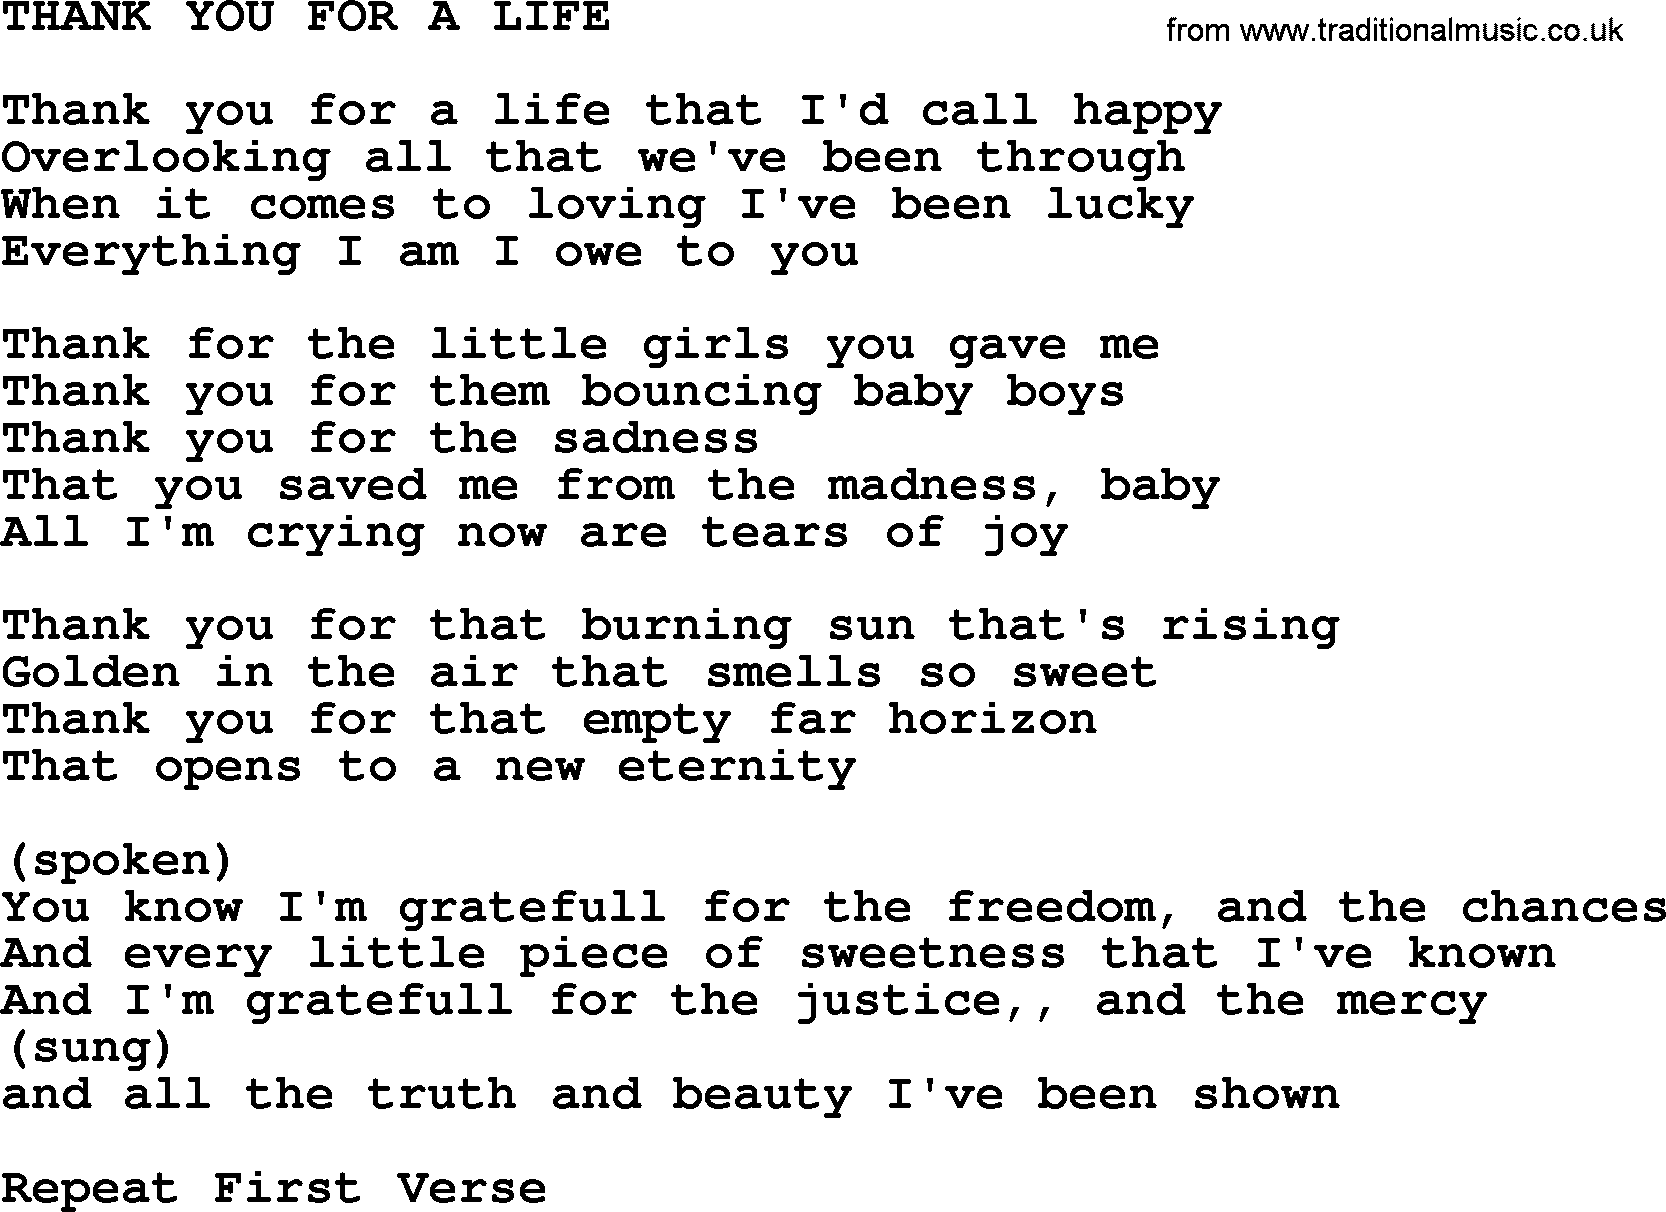 Kris Kristofferson song: Thank You For A Life lyrics